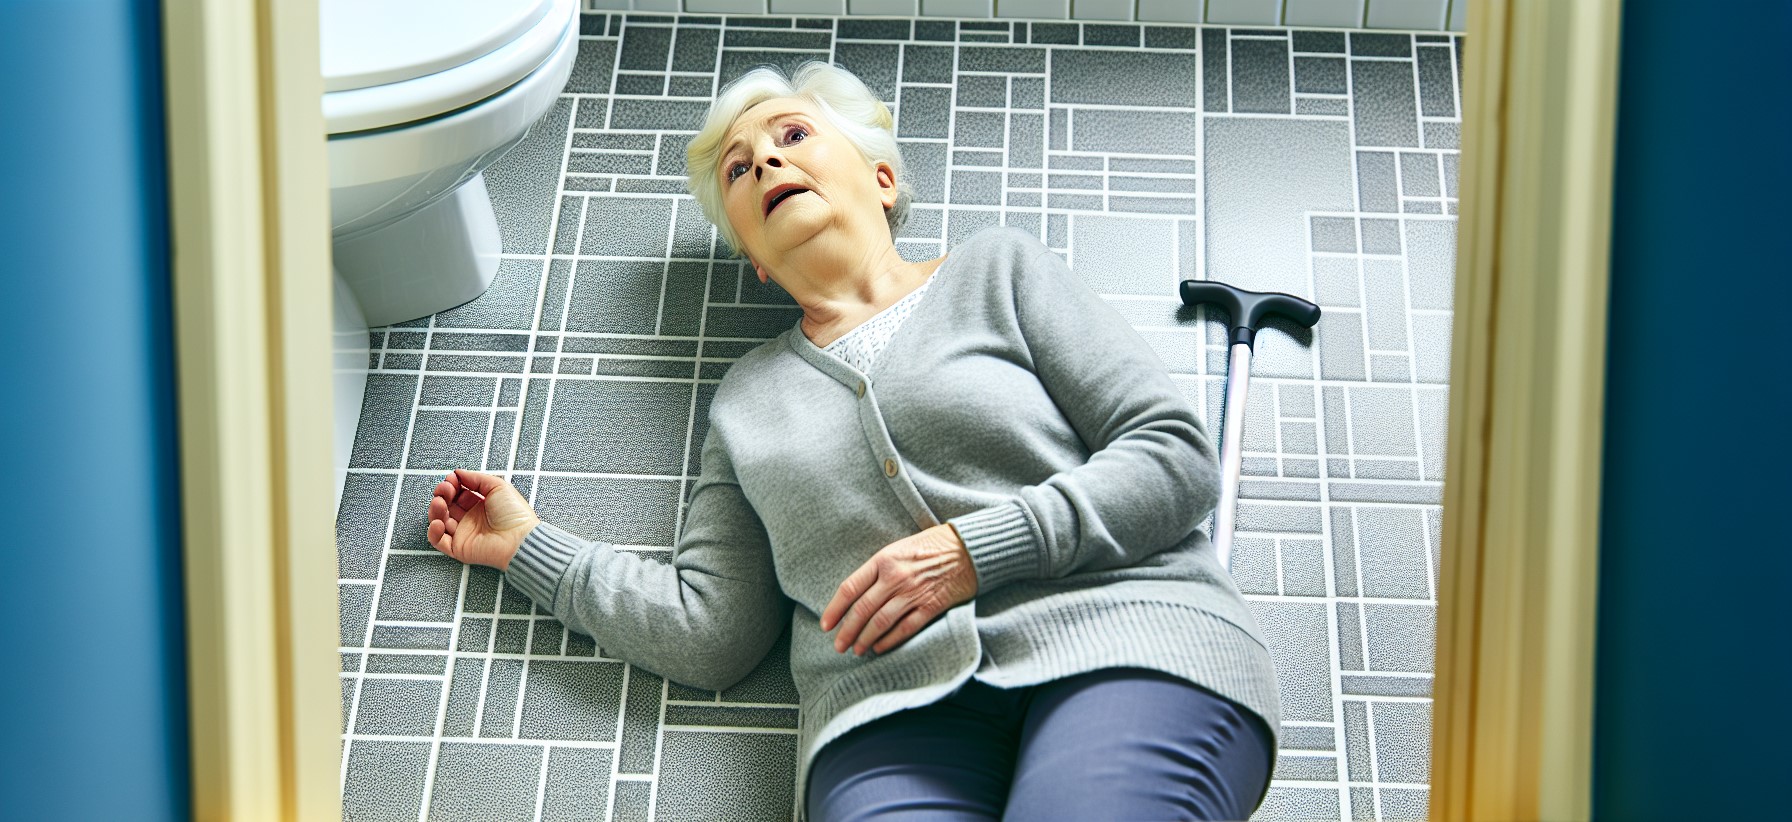 An elderly woman on the bathroom floor after falling. 